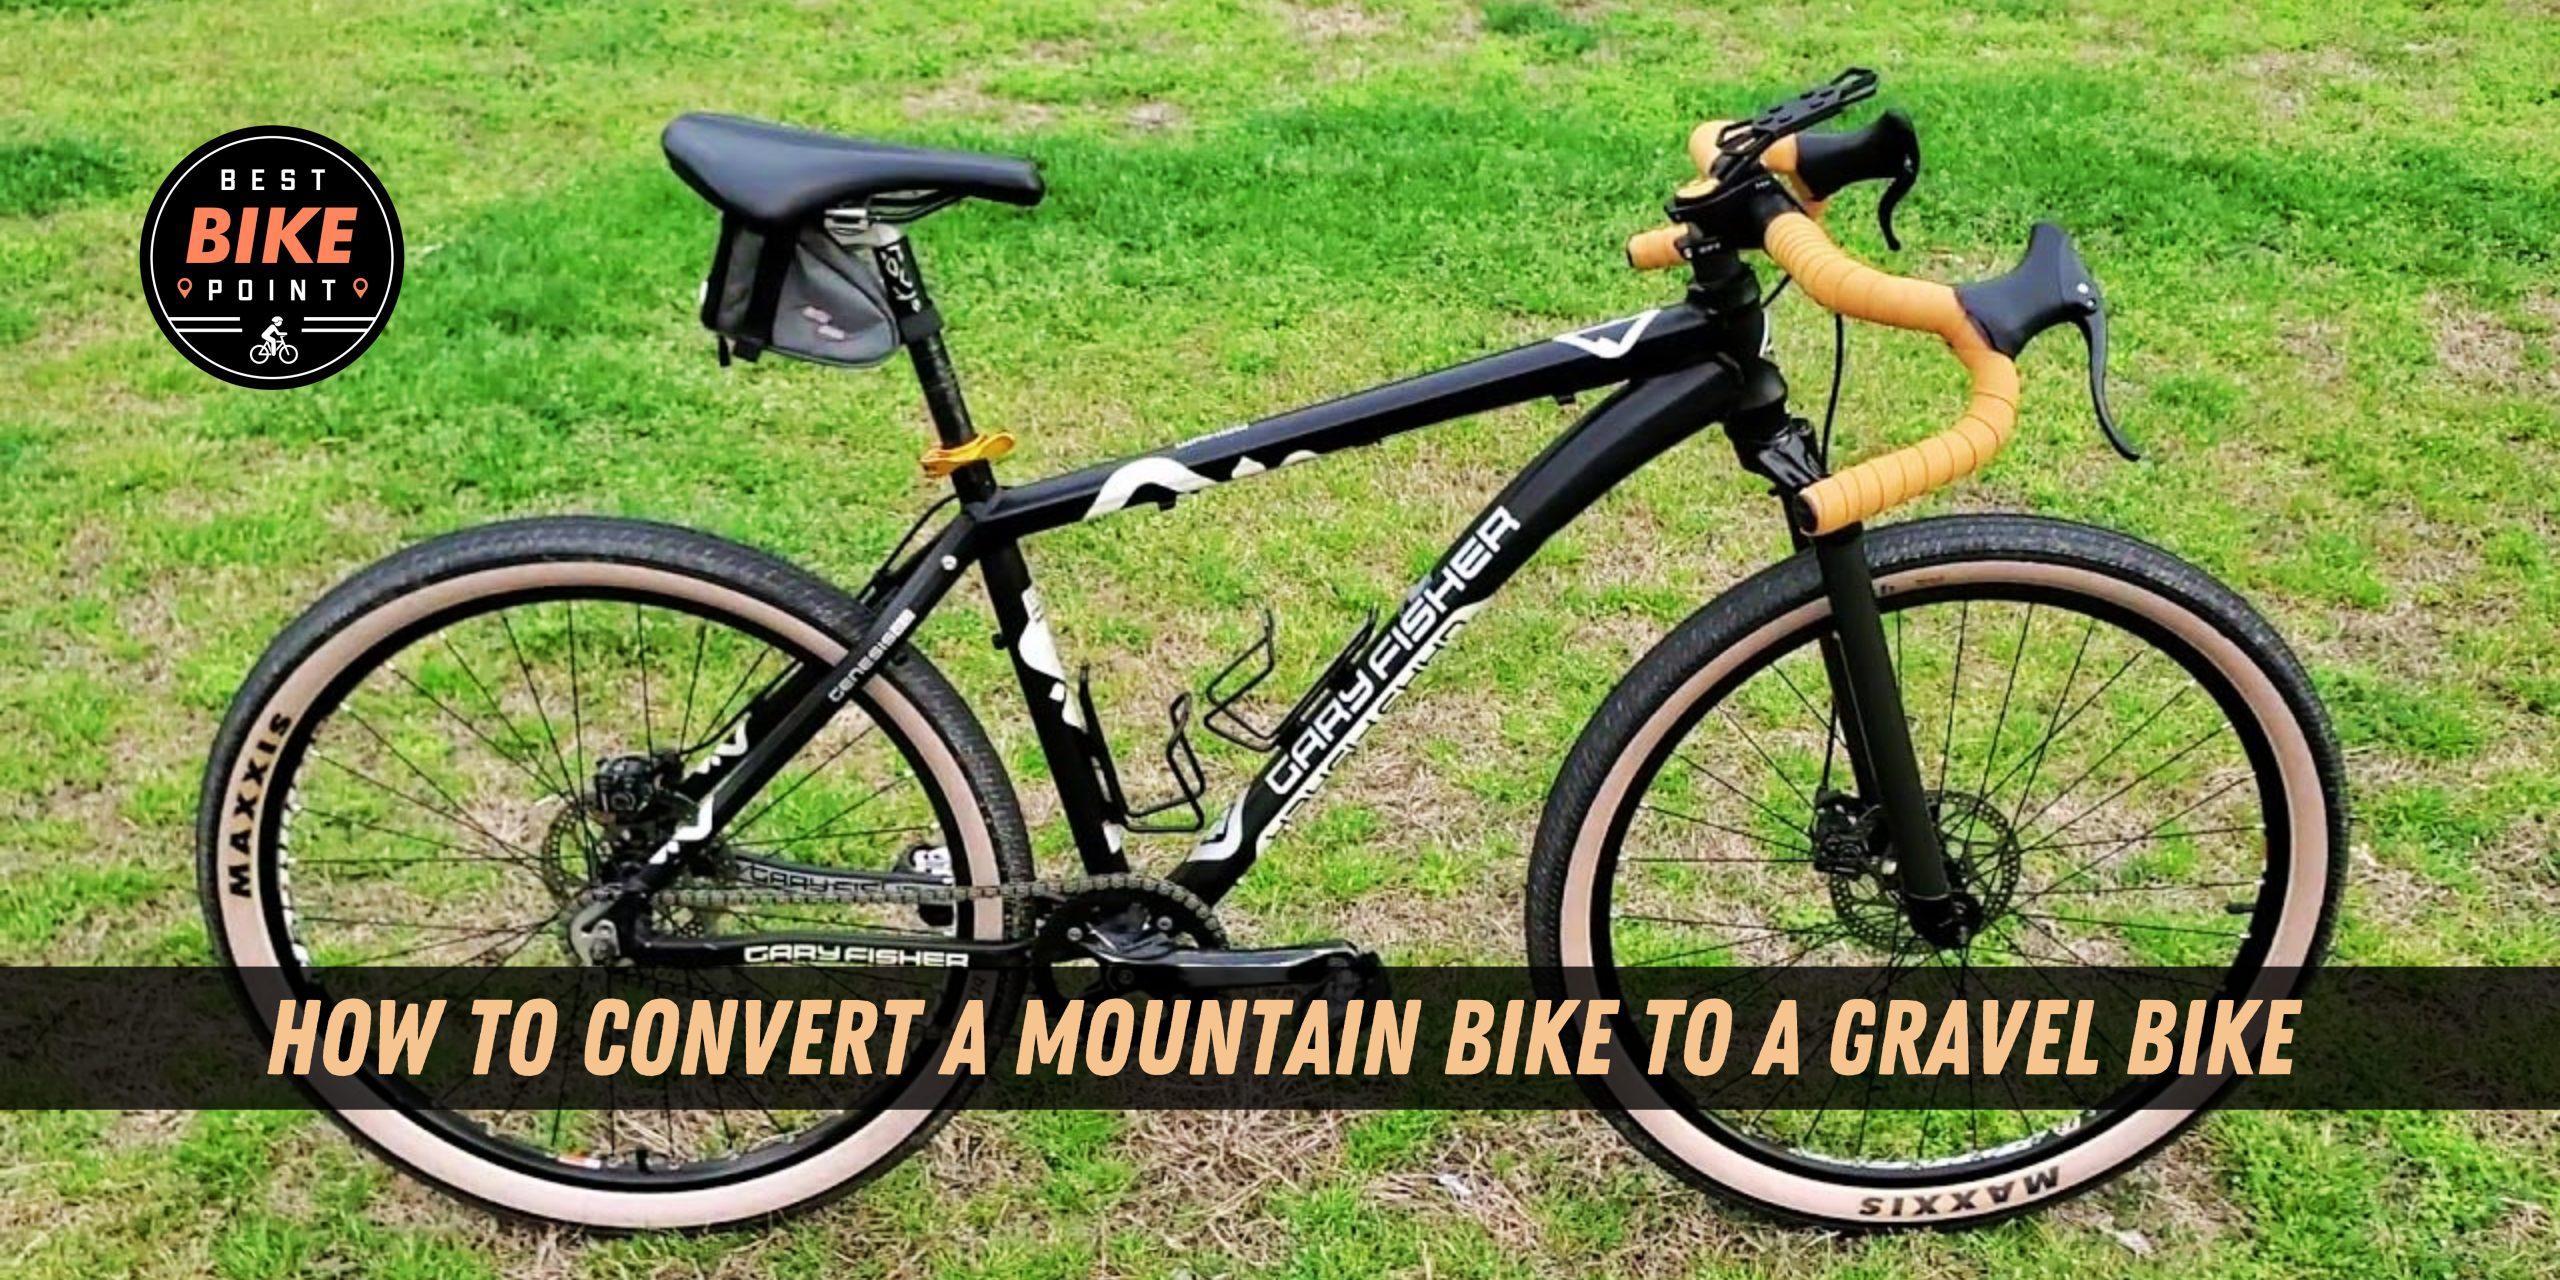 Convert a Mountain Bike to a Gravel Bike